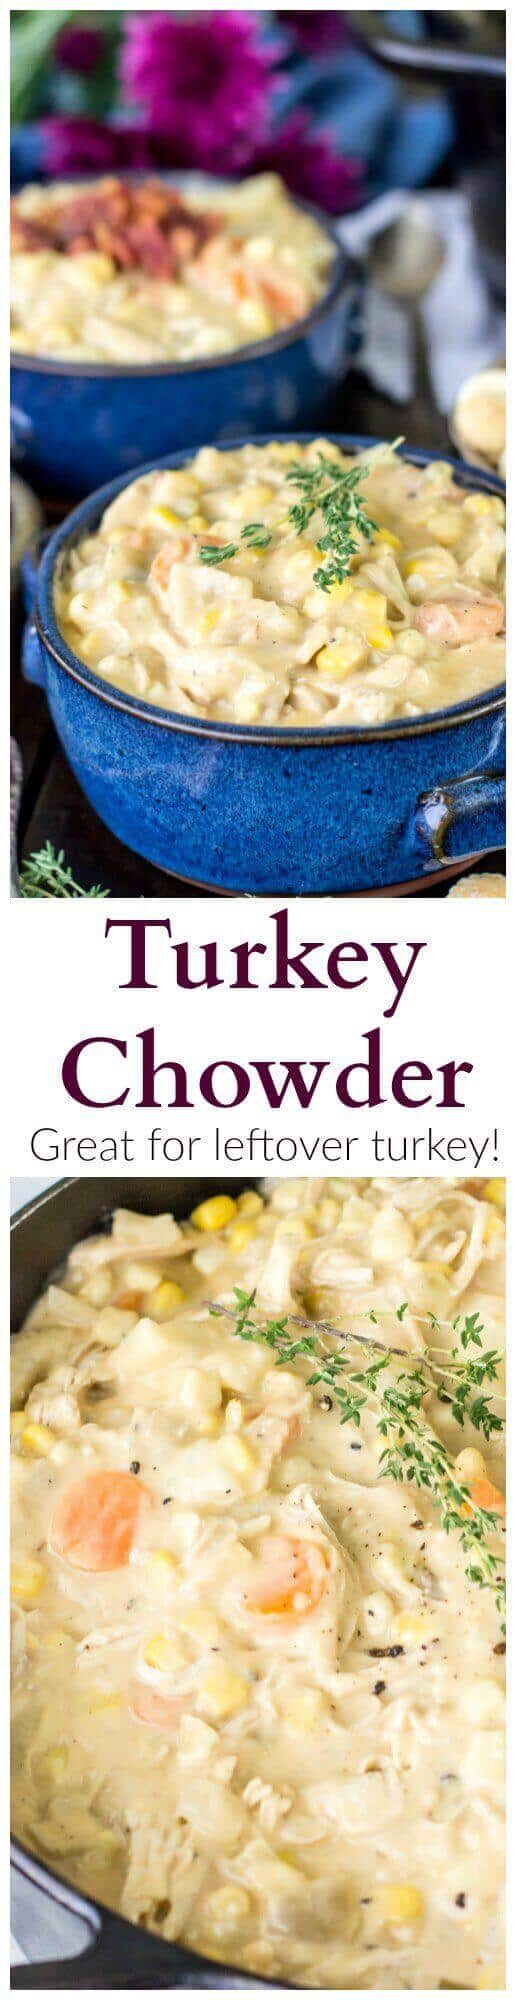 Turkey Chowder Great for leftover turkey